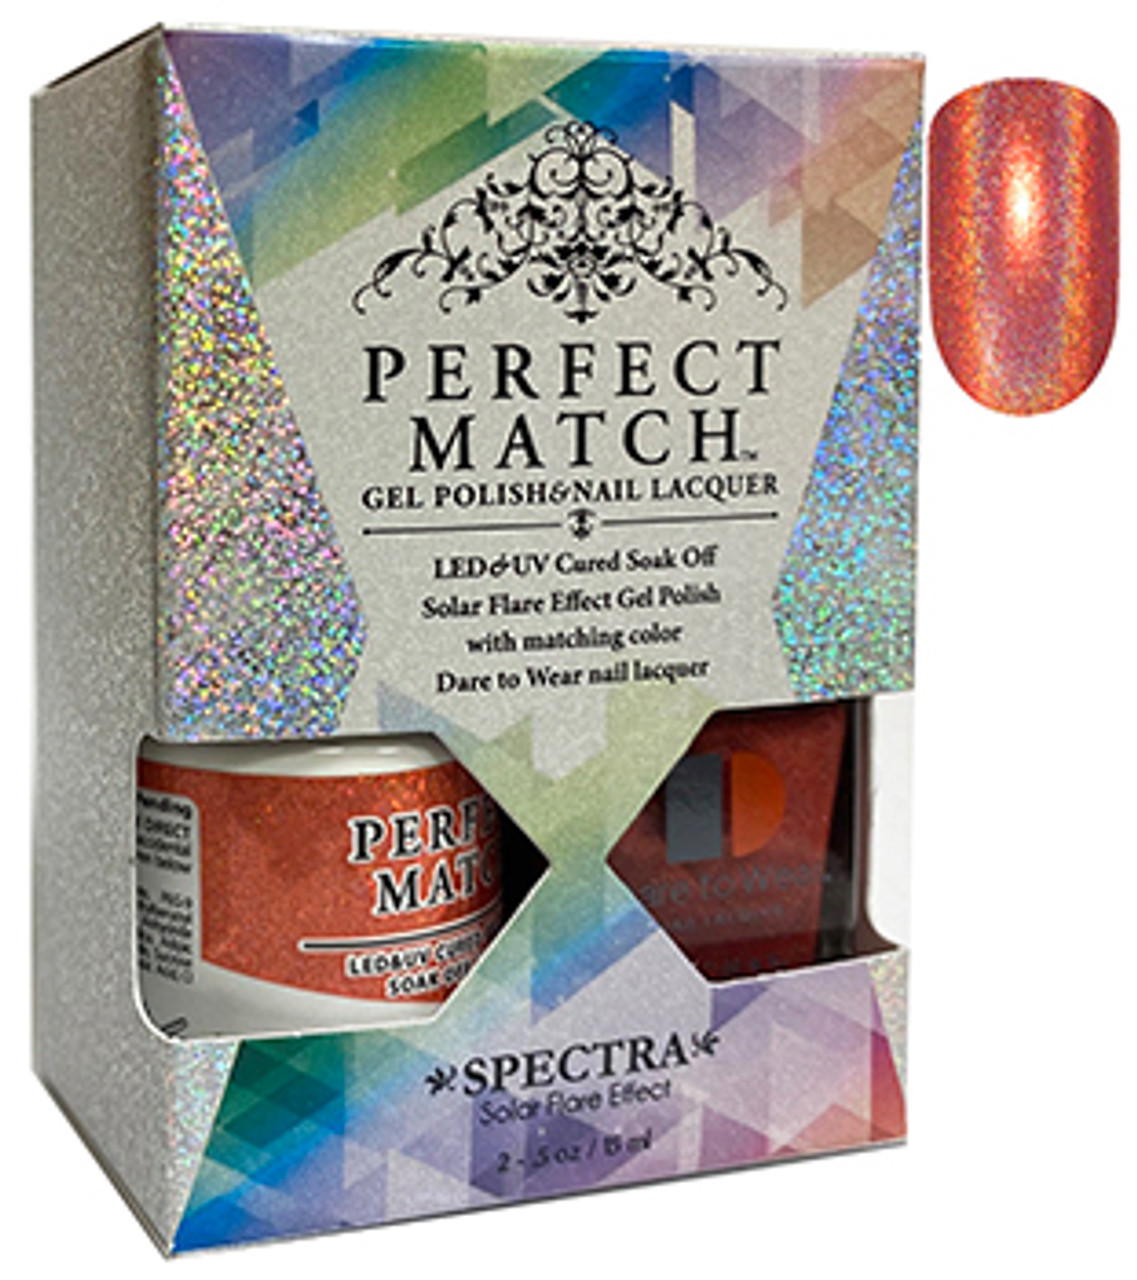 LeChat Perfect Match Spectra Gel Polish + Nail Lacquer Mars - 5oz